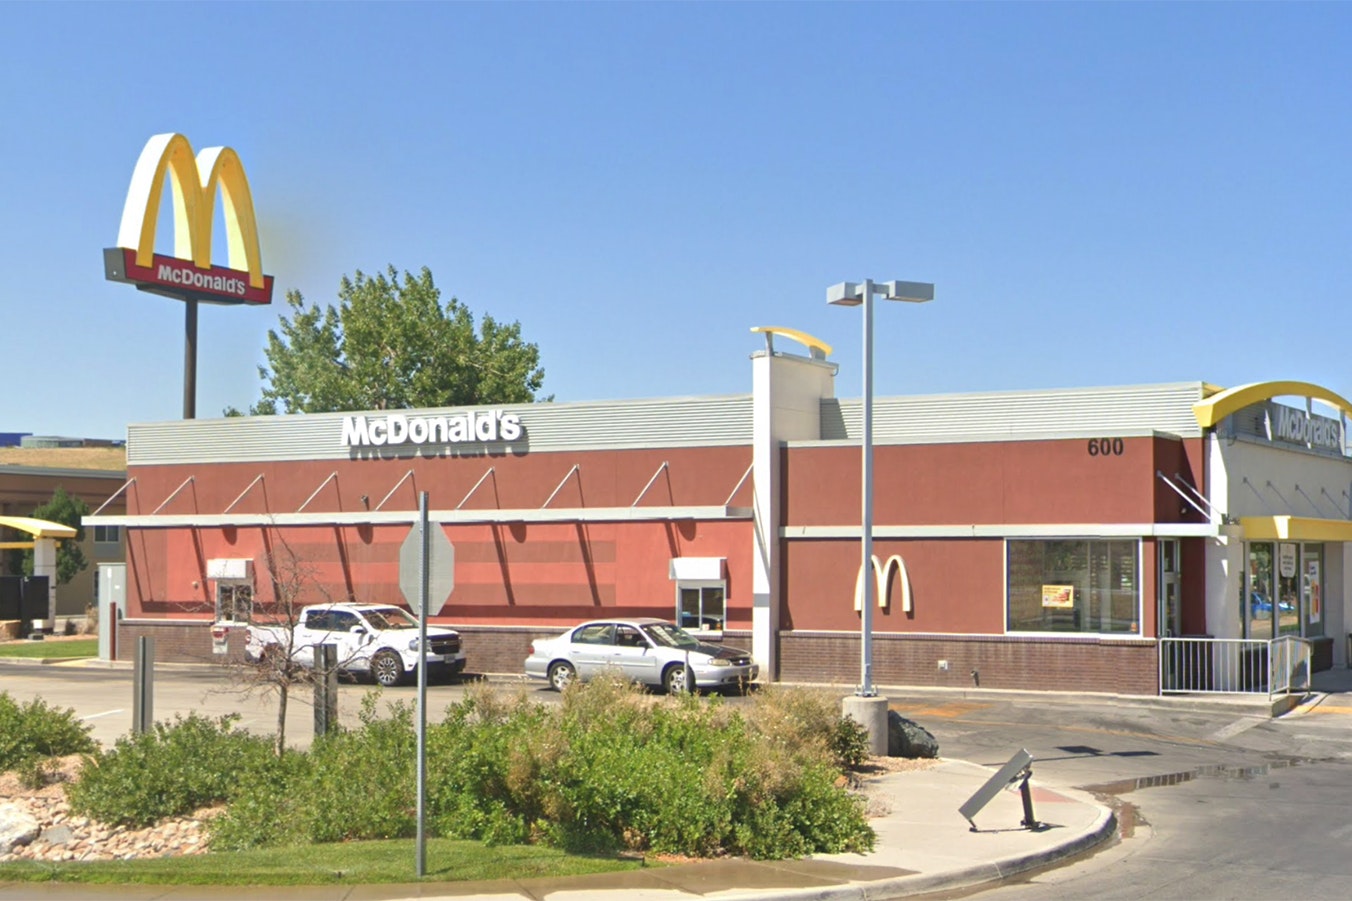 The McDonald's restaurant at 600 F St. in Casper, Wyoming.